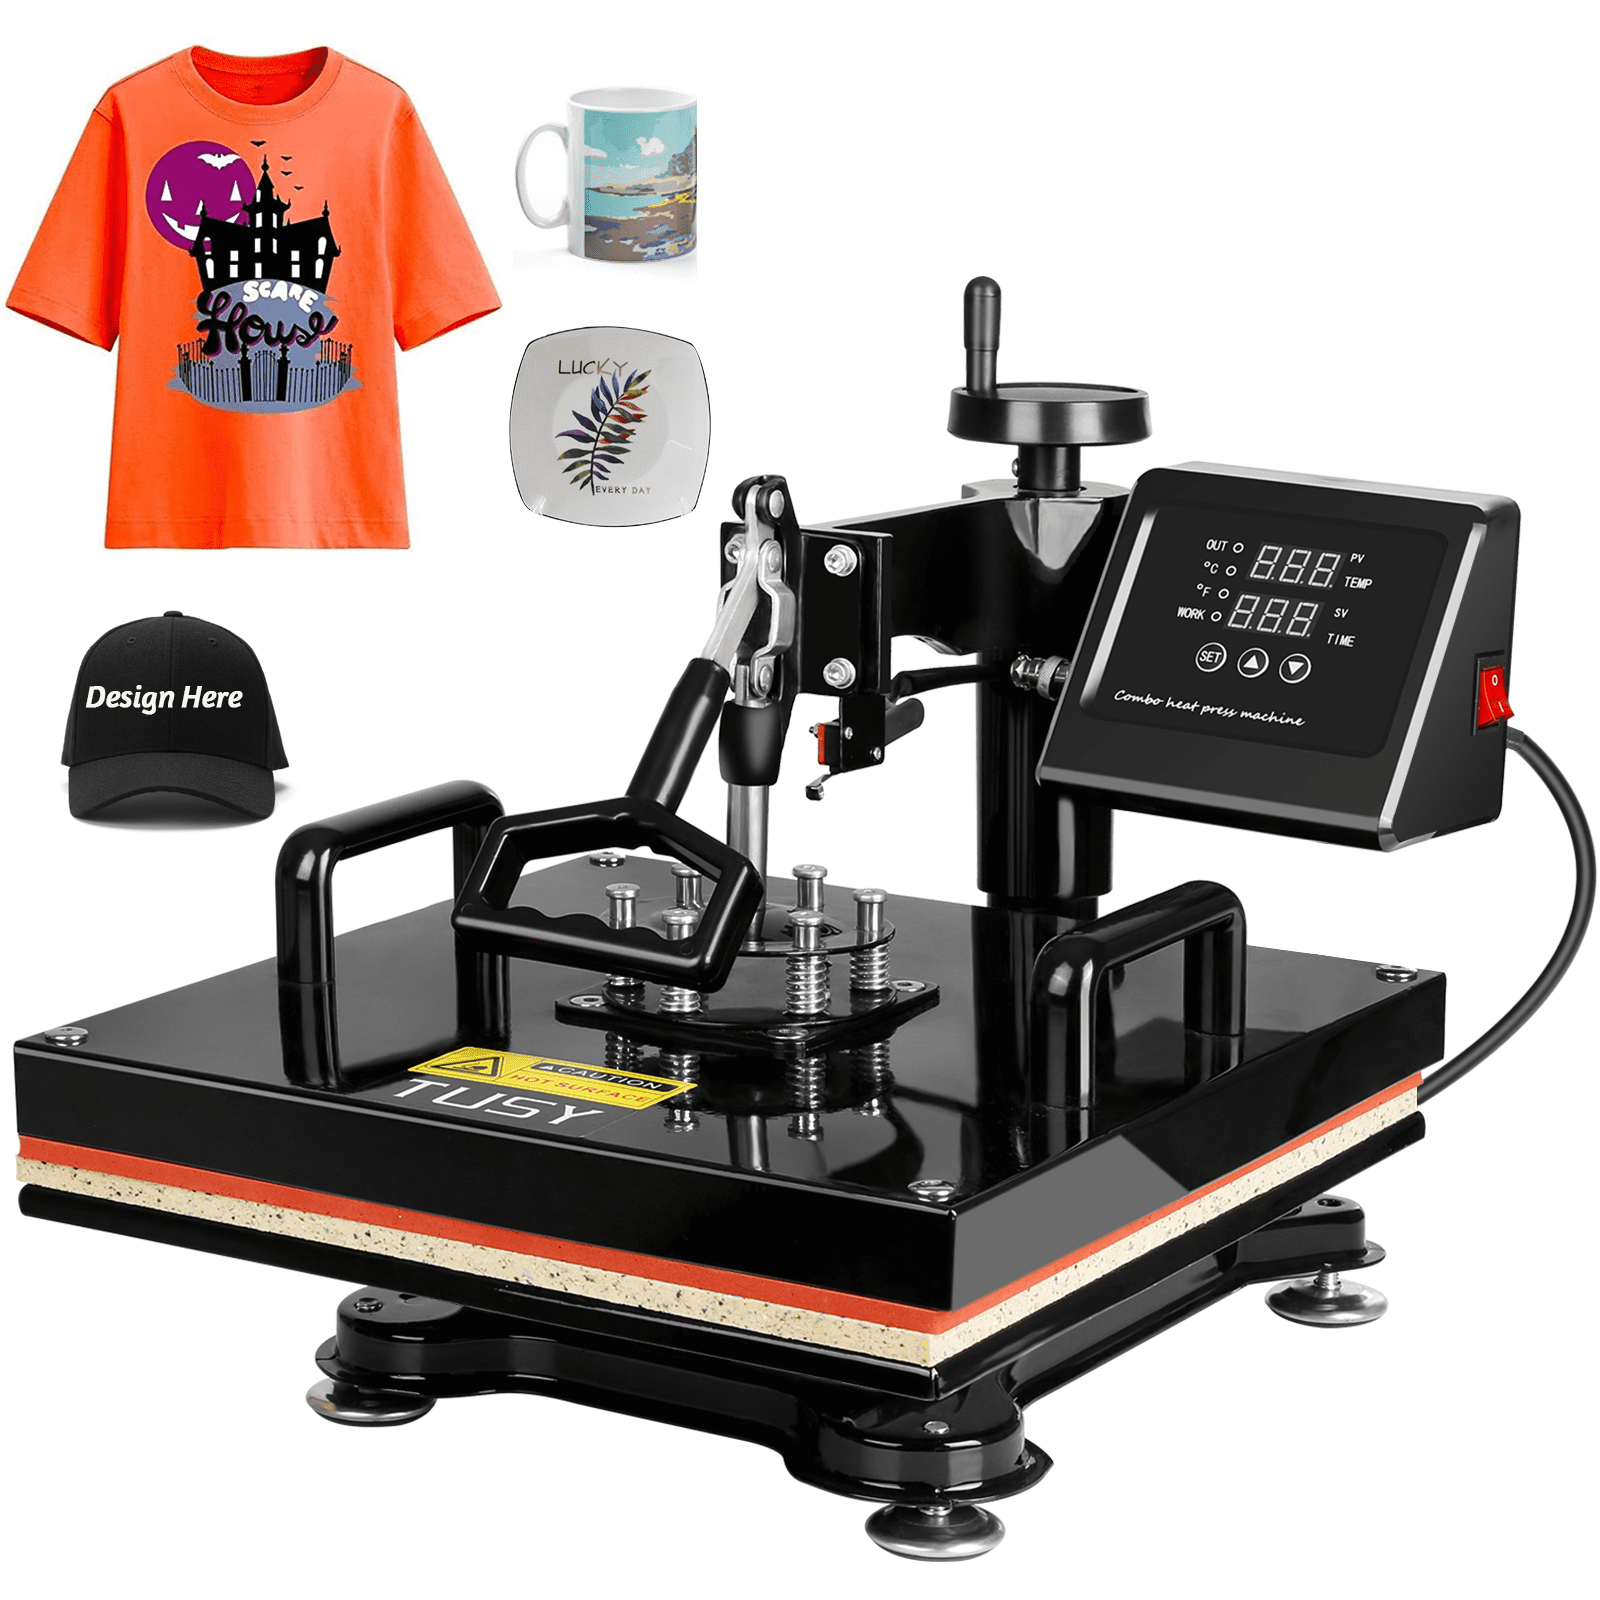 Industrial Quality Heat Press Machine for T Shirts Heat Press TUSY Digital Heat Transfer Sublimation 15 x 15